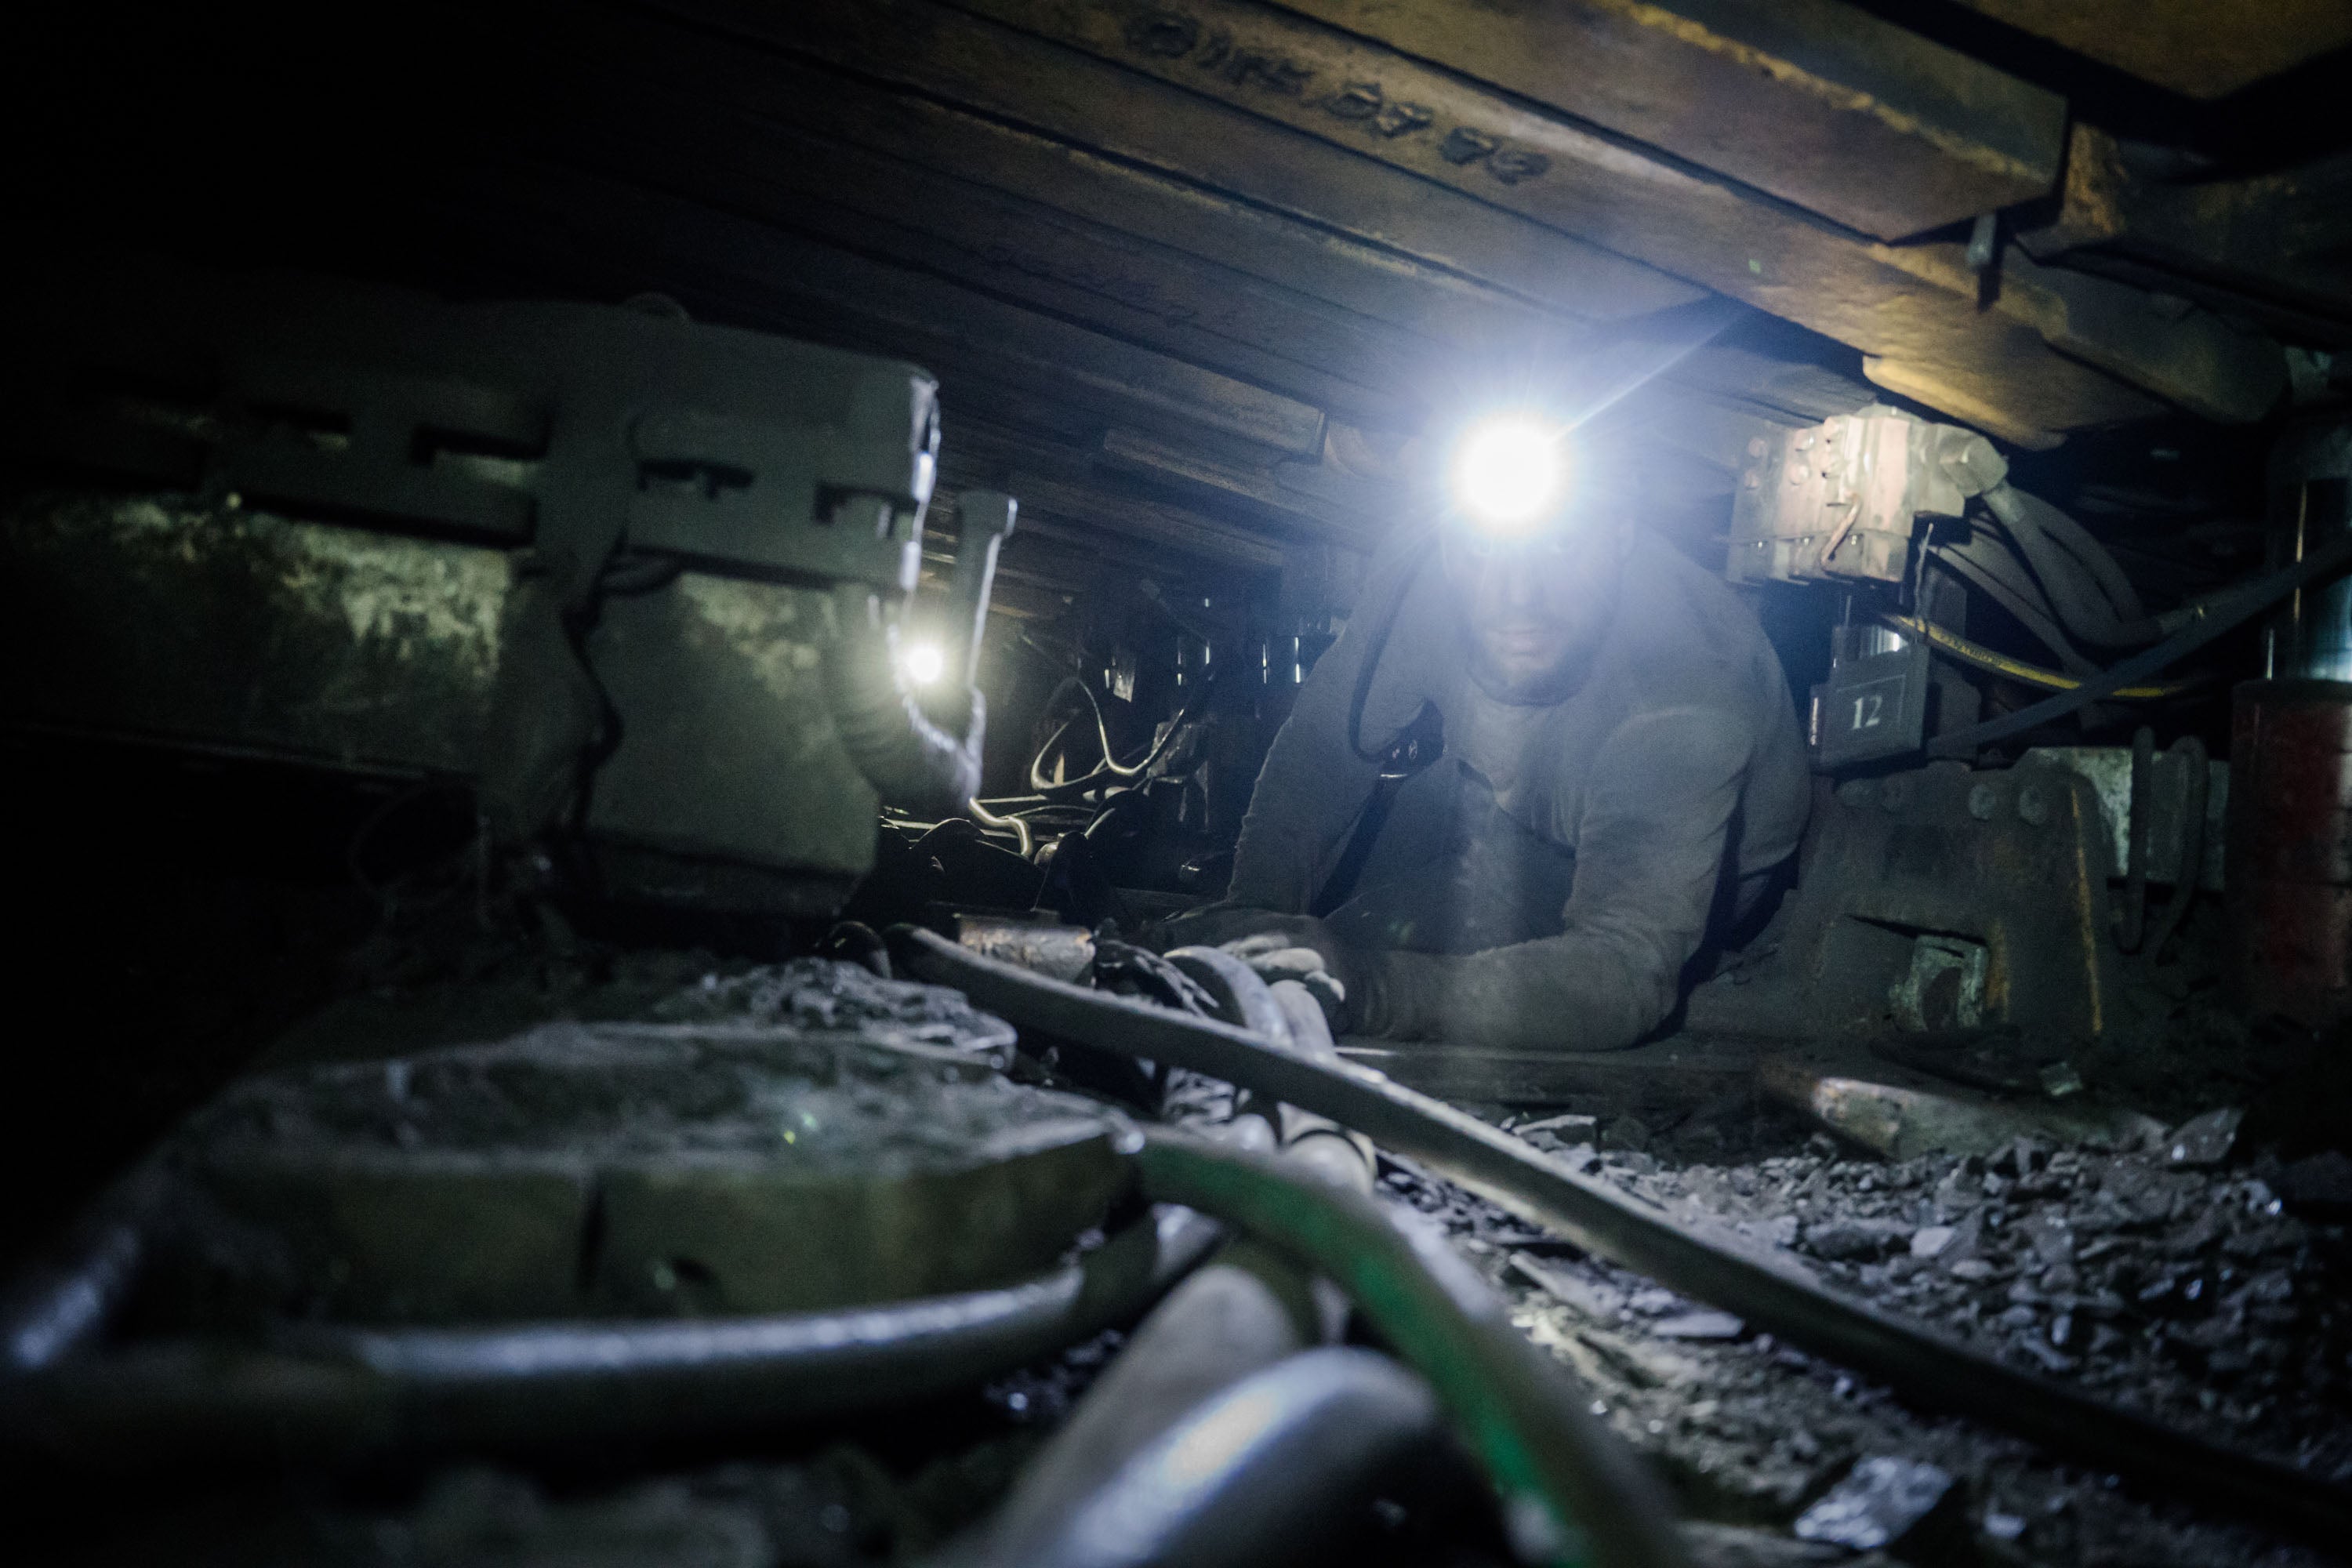 A miner operates an excavator in a cramped corridor deep underground